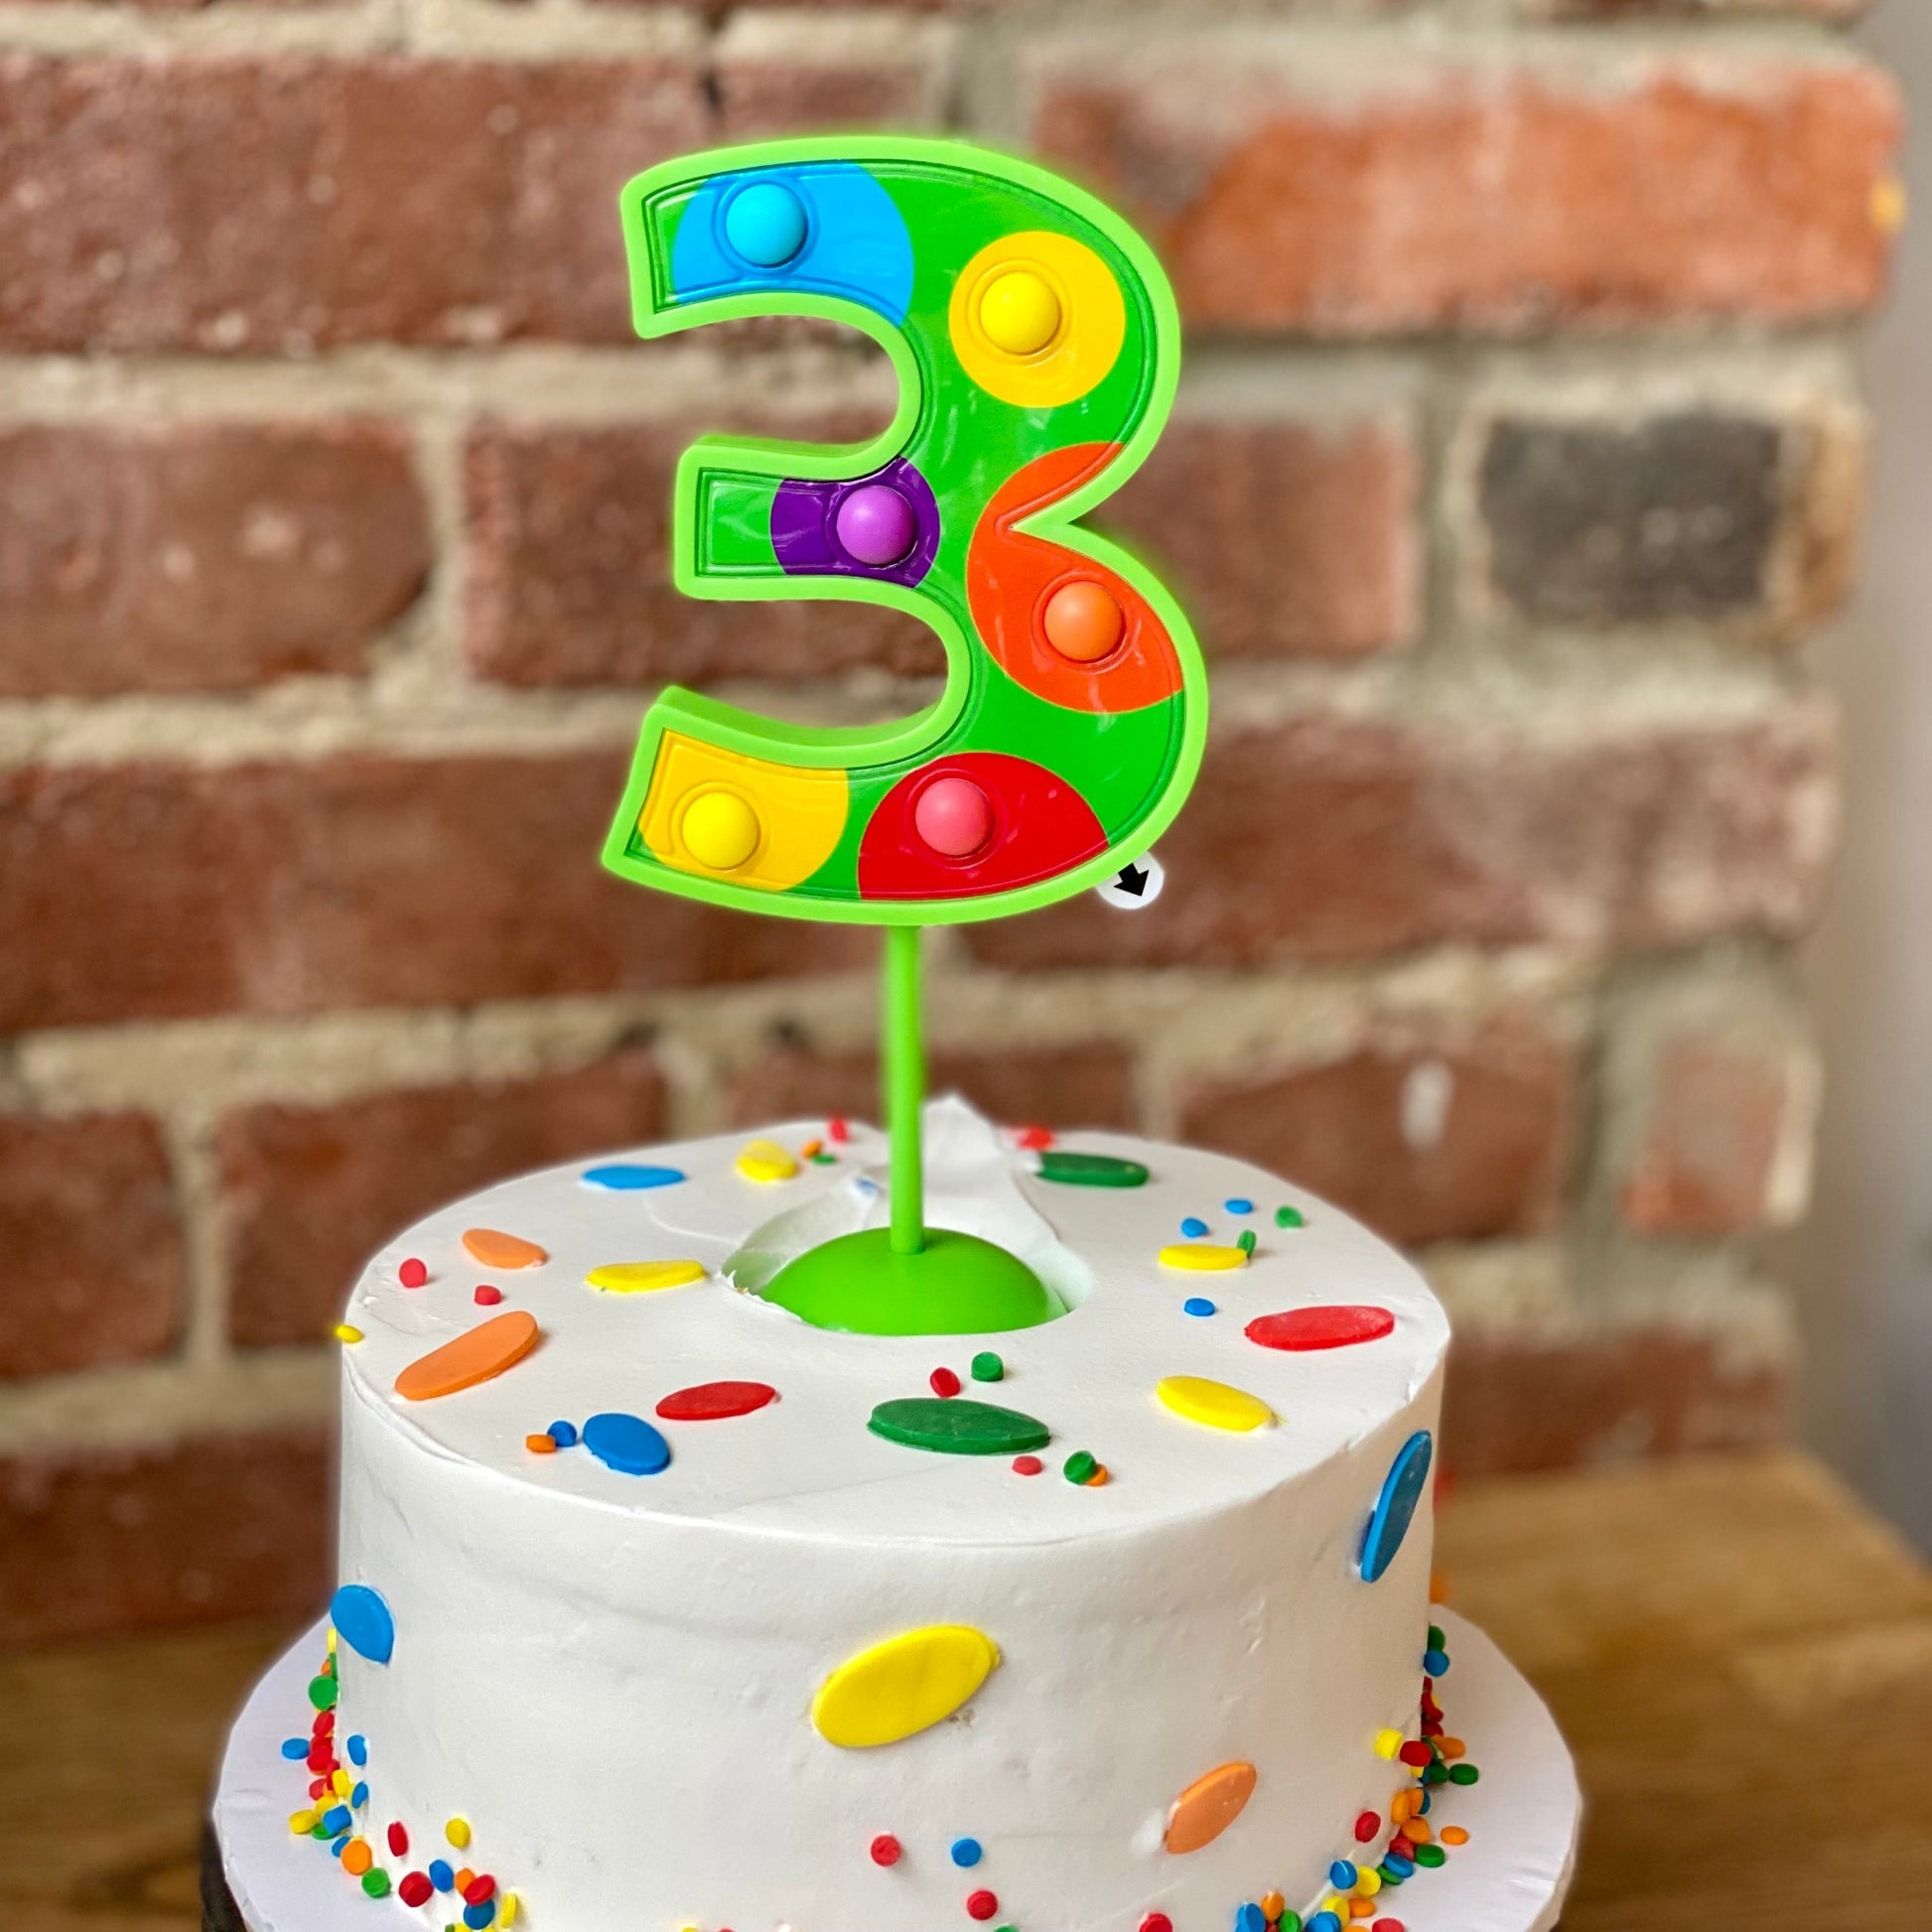 Kids birthday cake with light up number three